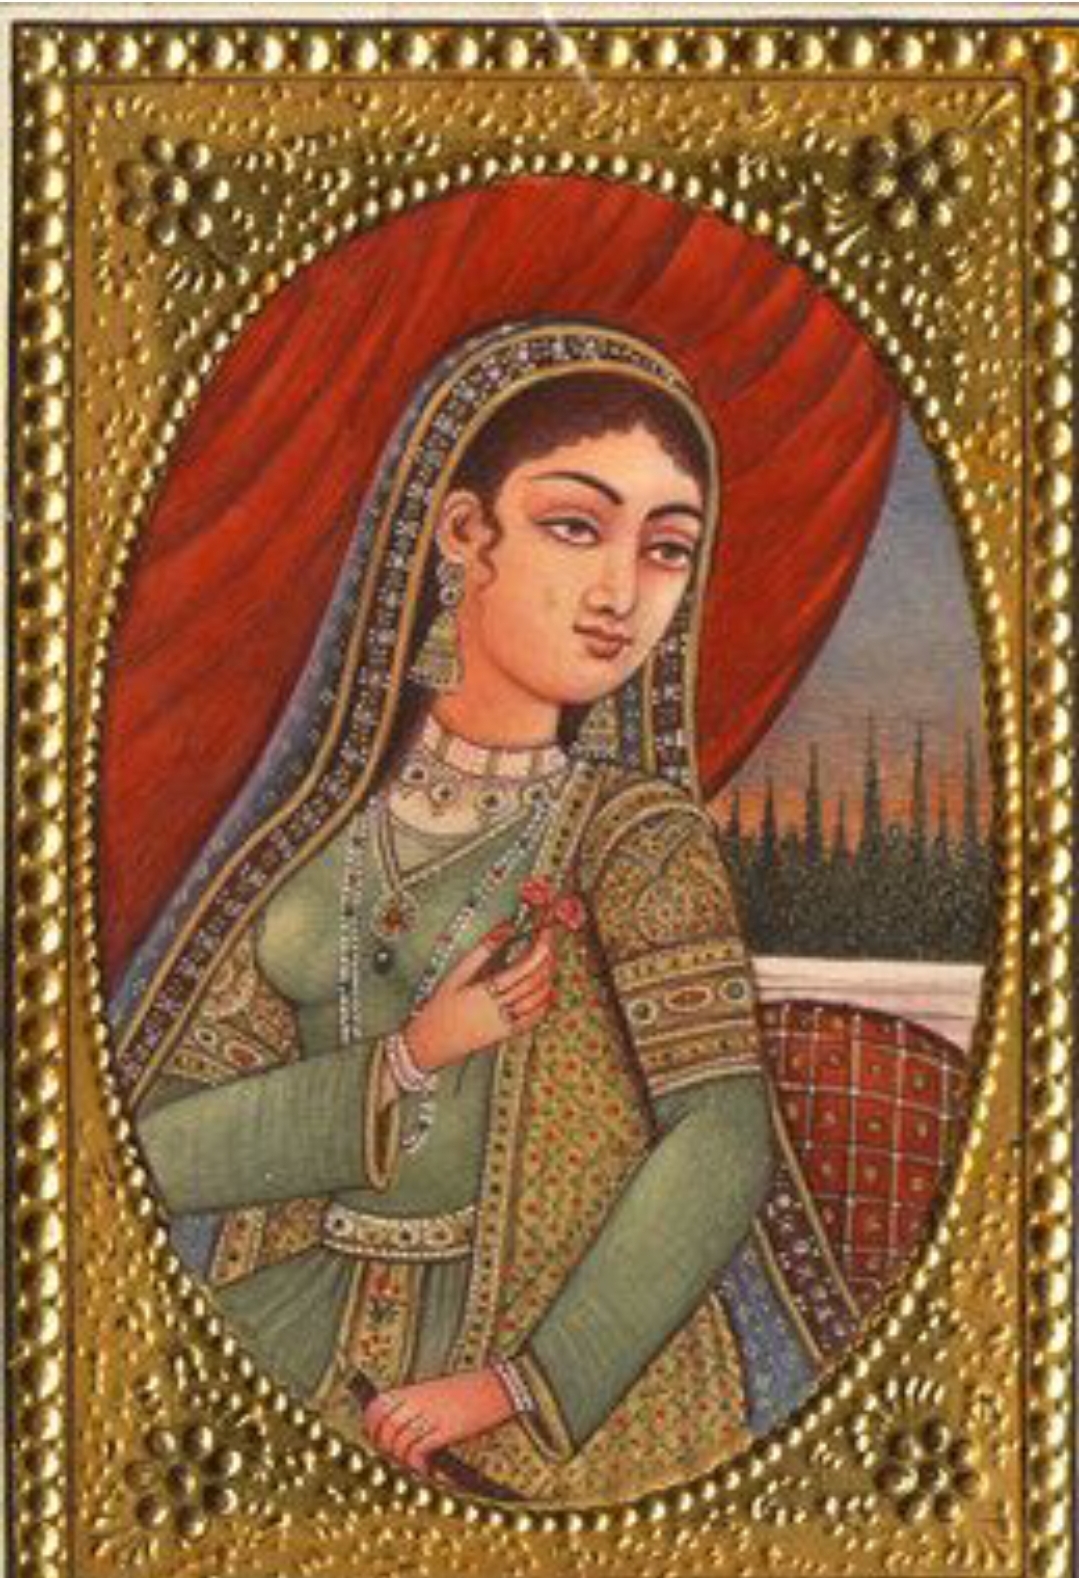 Five women of the Mughal period